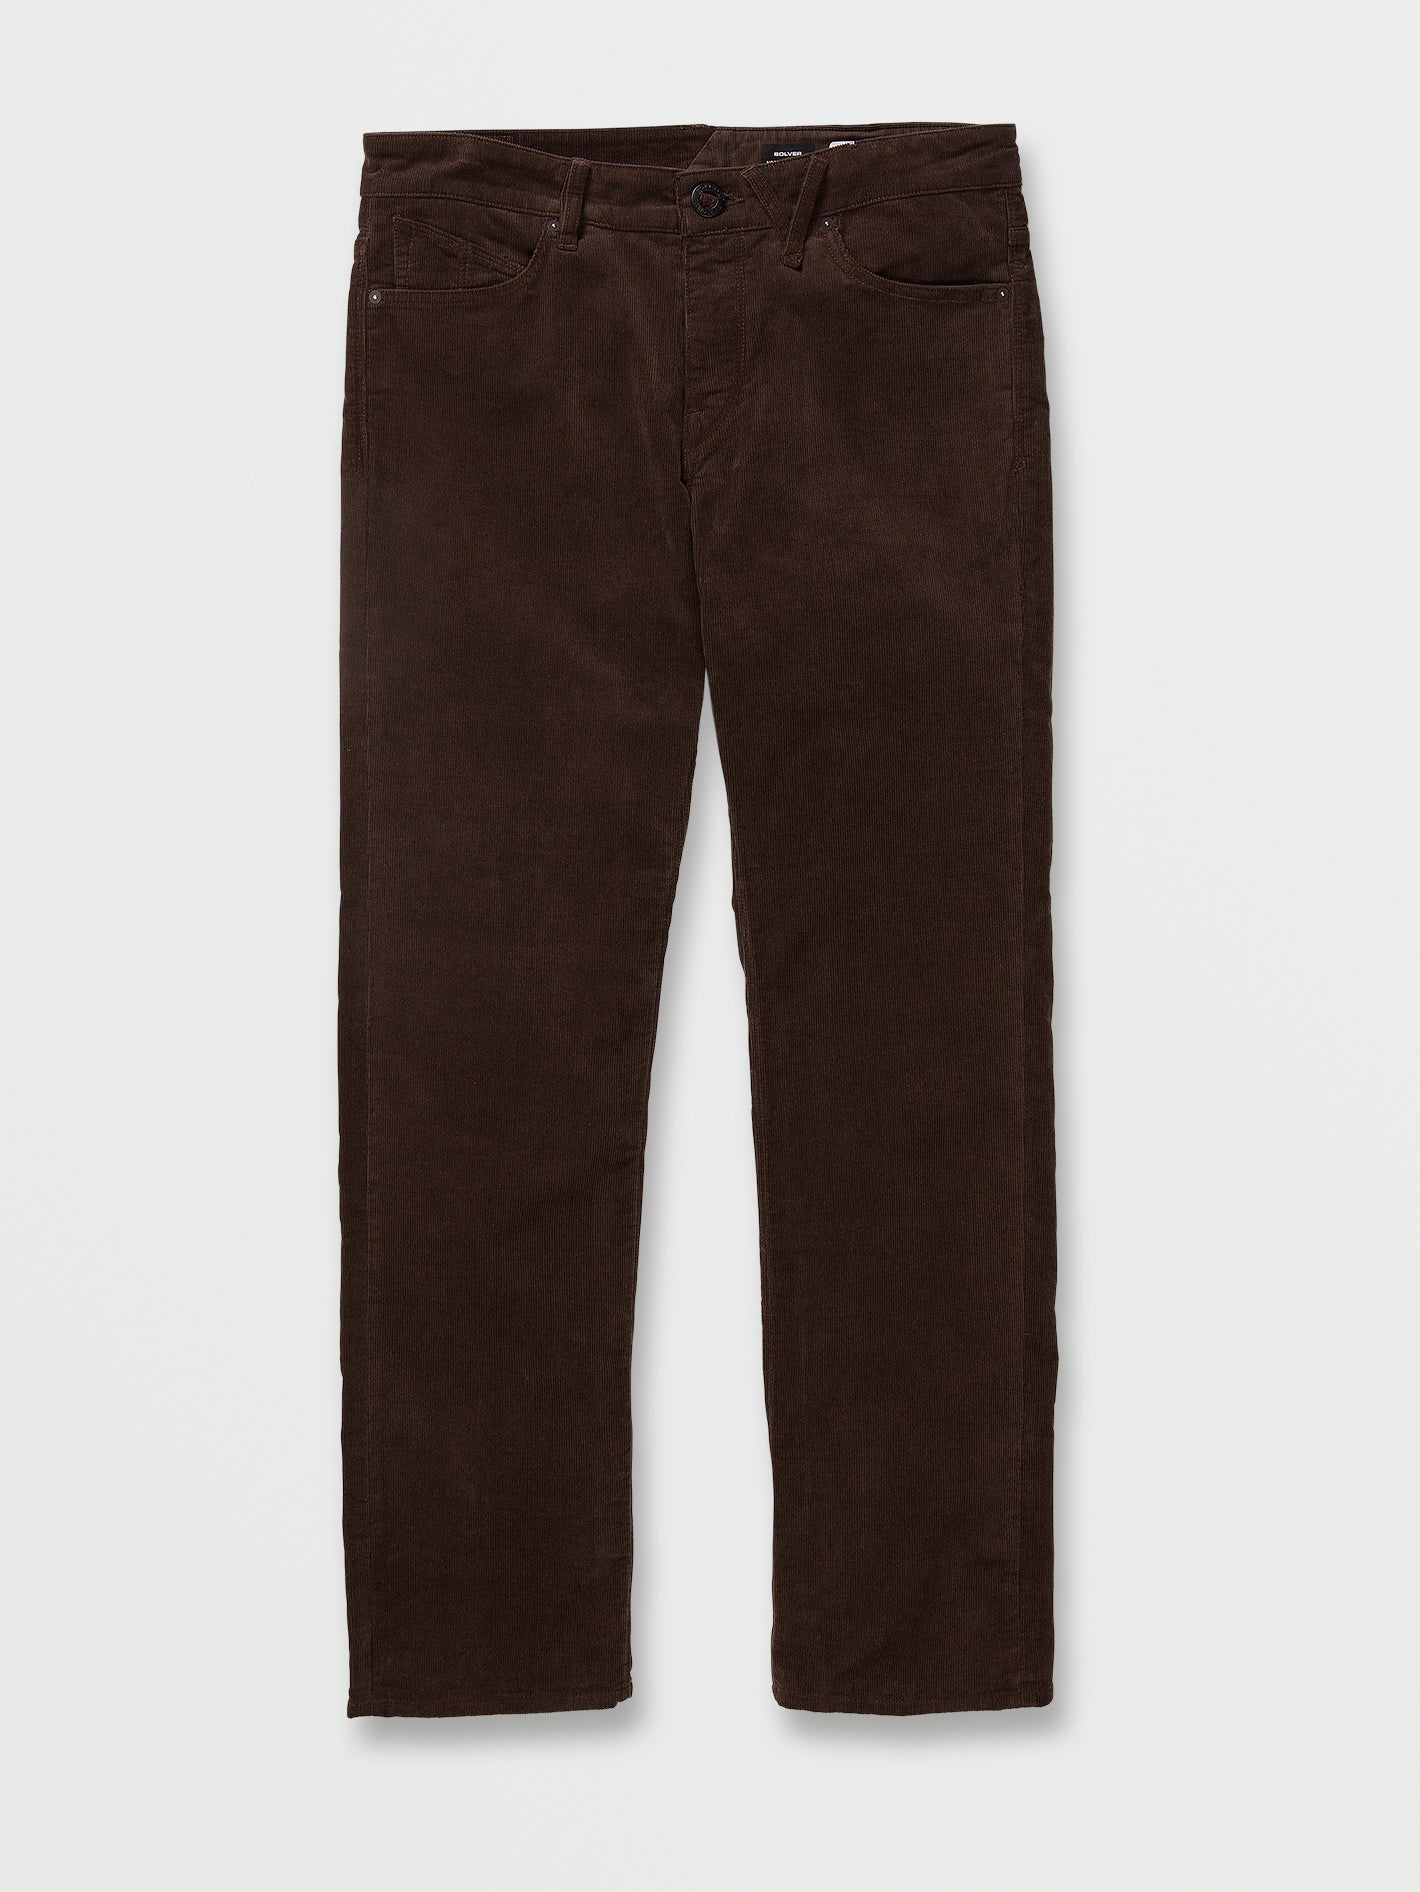 Brown Corduroy Pants